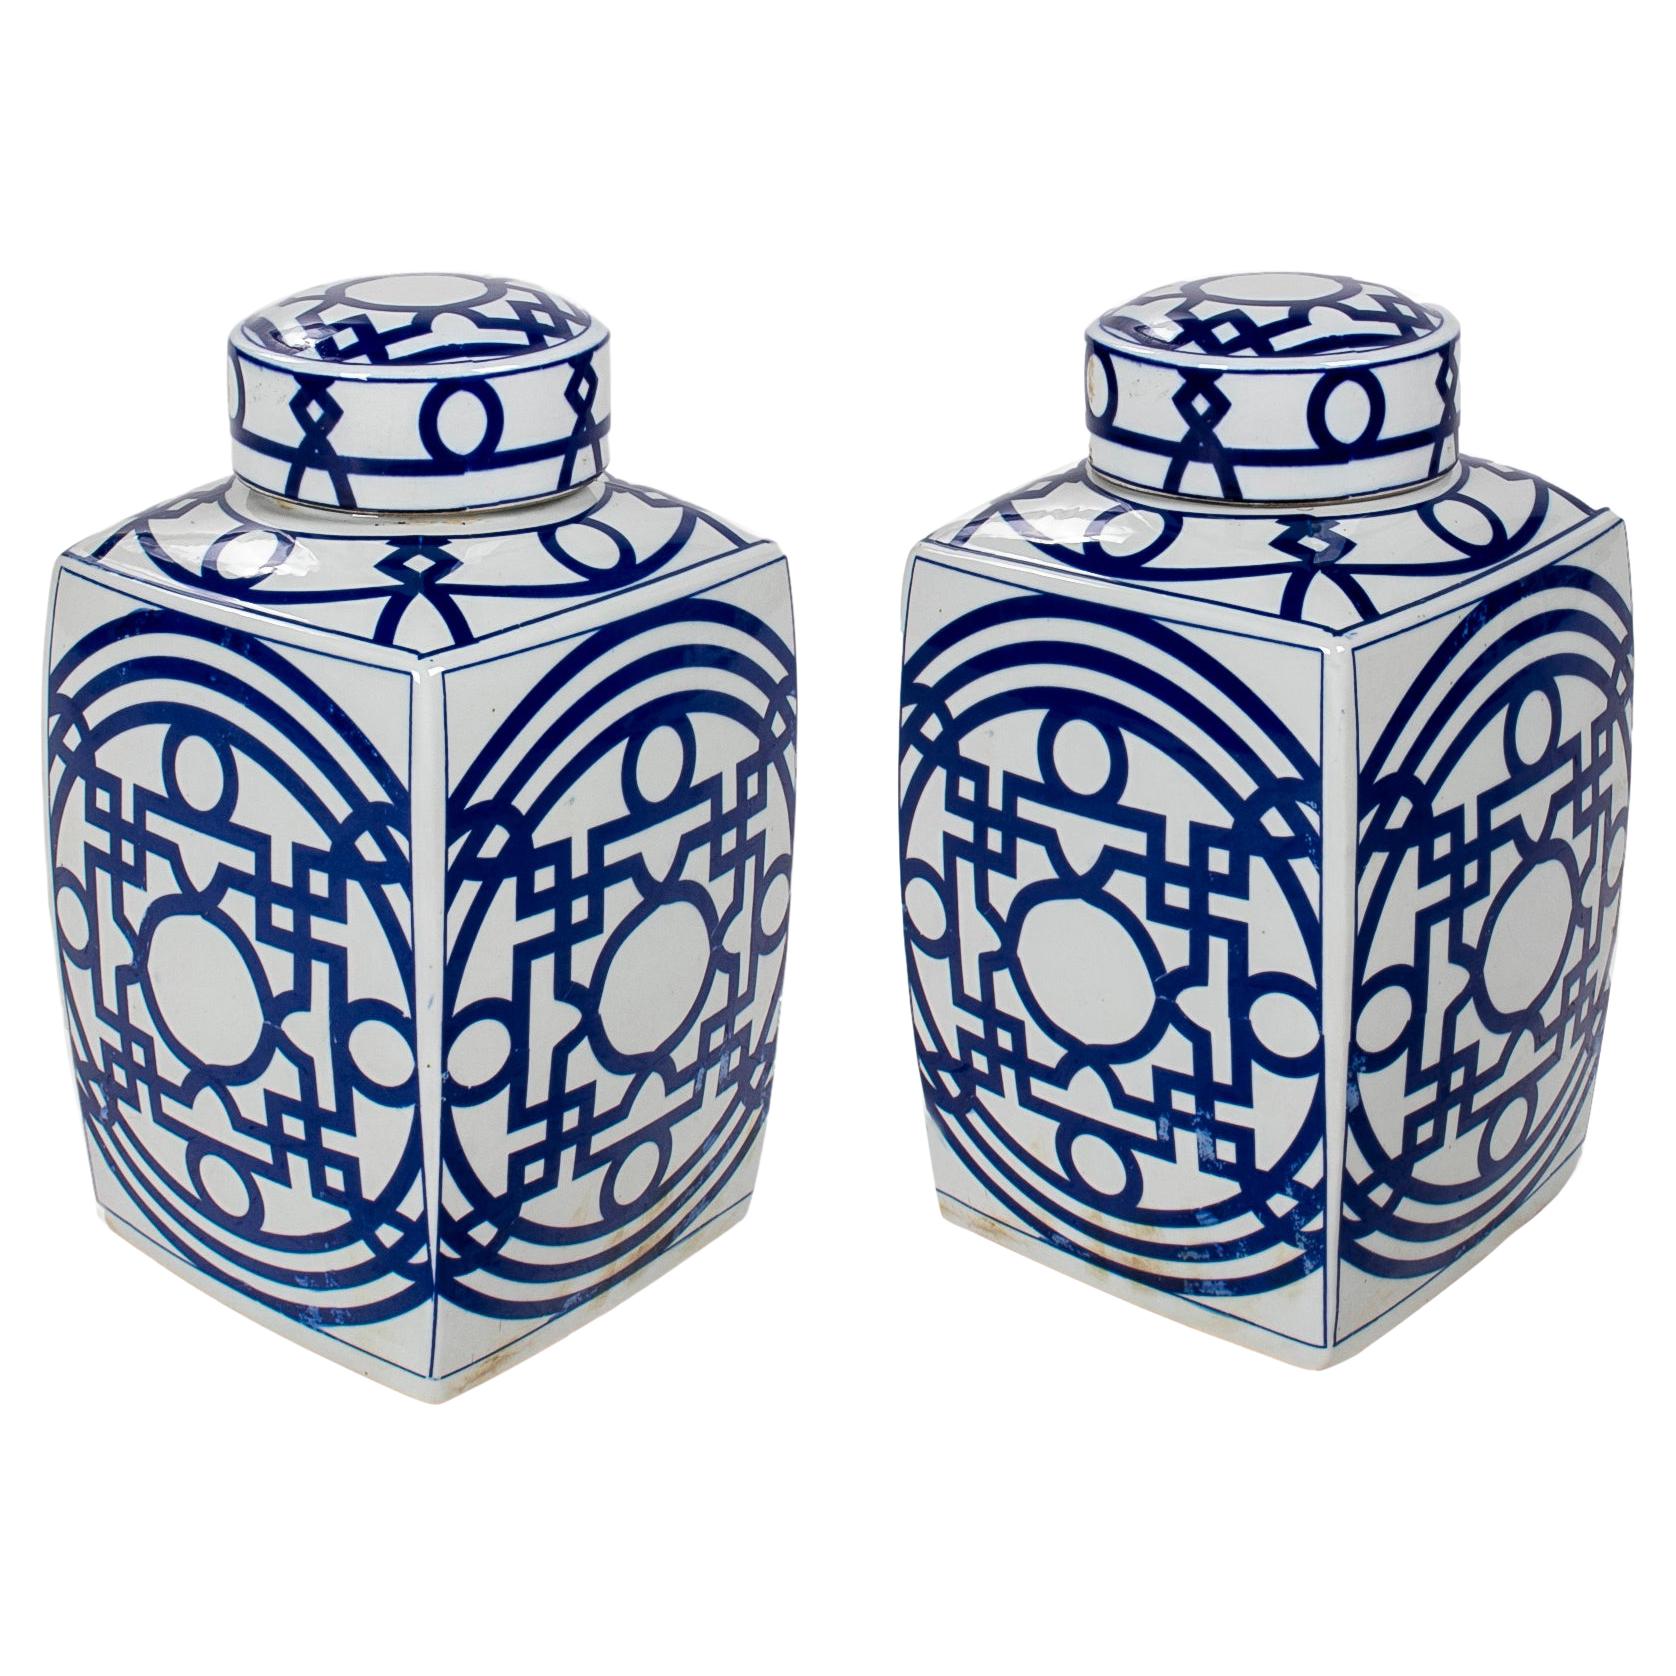 Pair of Asian White Glazed Porcelain Urns w/ Blue Geometric Decorations & Lids